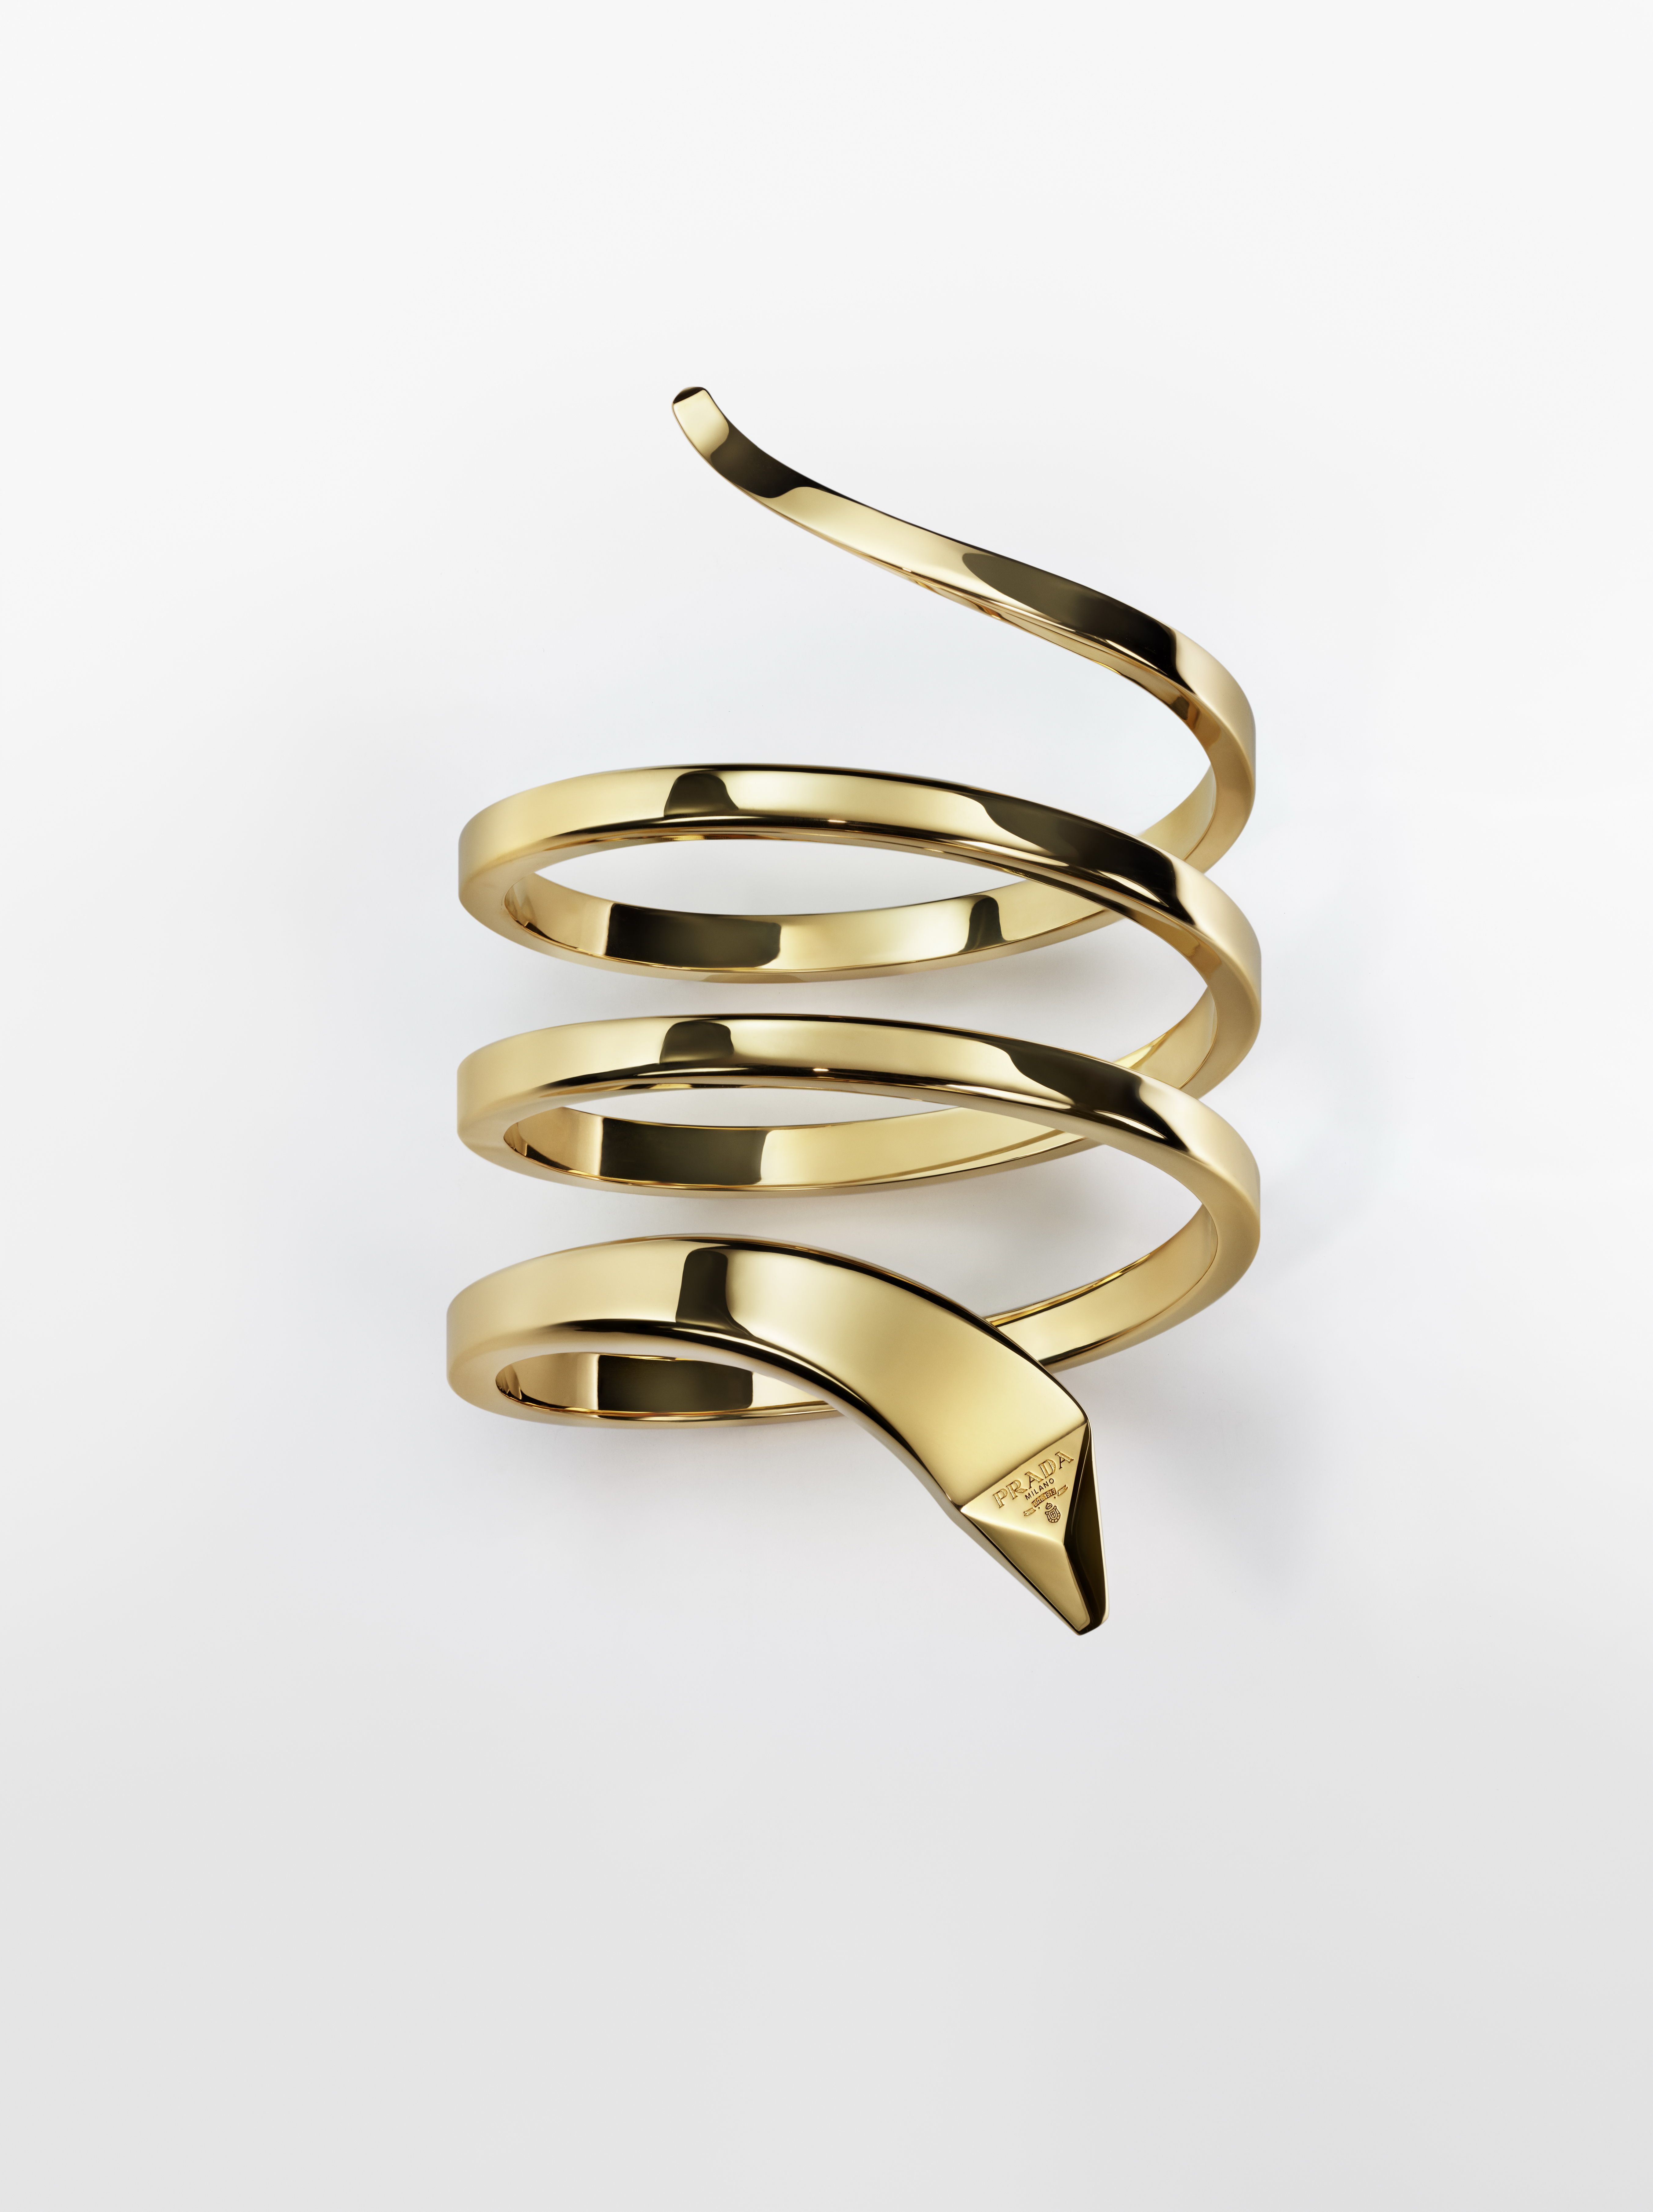 Repurposed Prada has our entire heart 🖤 #olorthelabel #reworkedjewelry